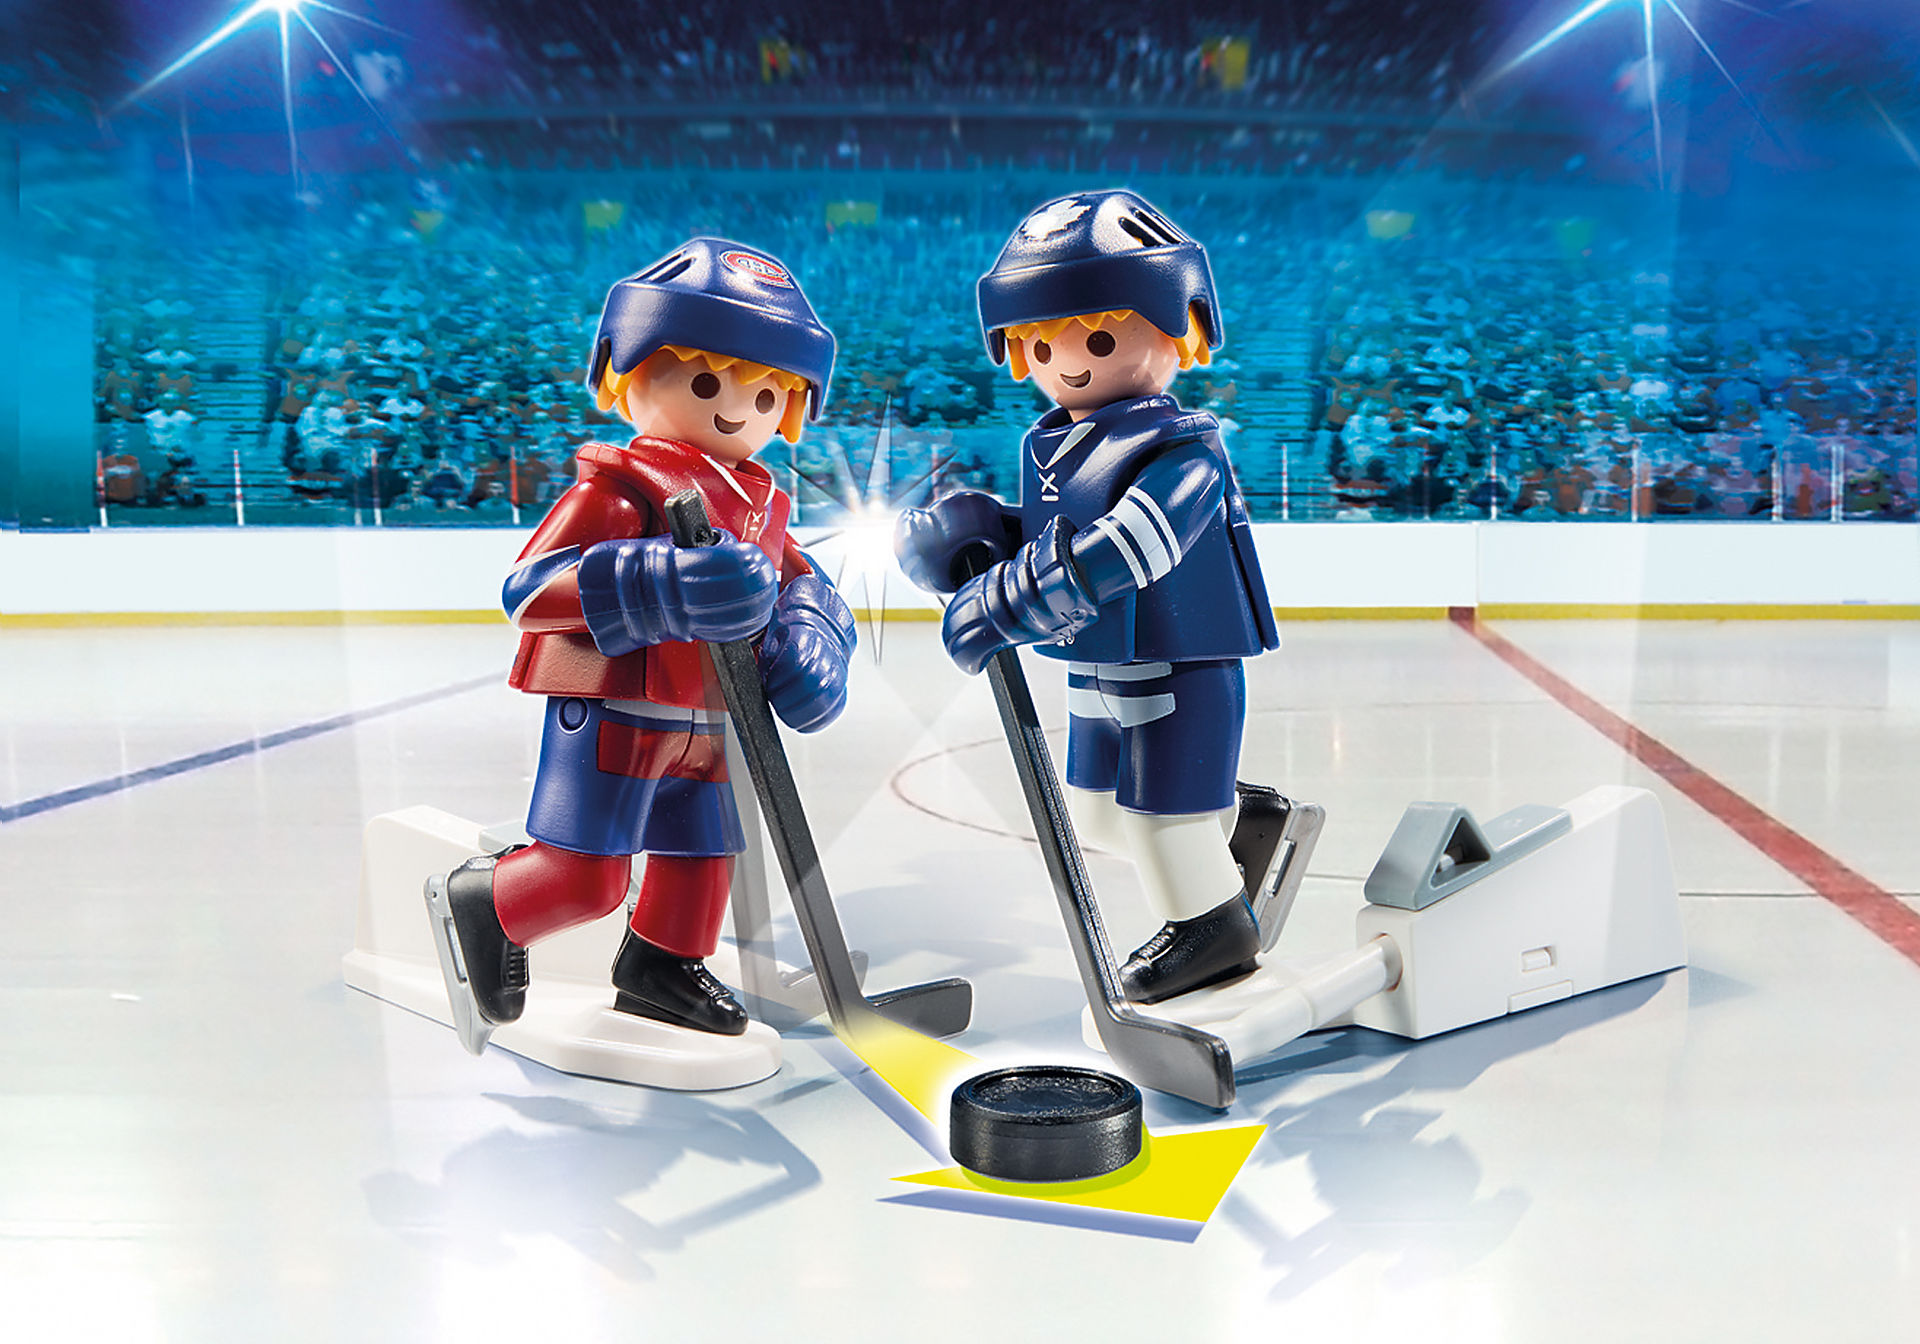 9013 NHL™ rivaux - Toronto Maple Leafs™ vs Montreal Canadiens™ zoom image1